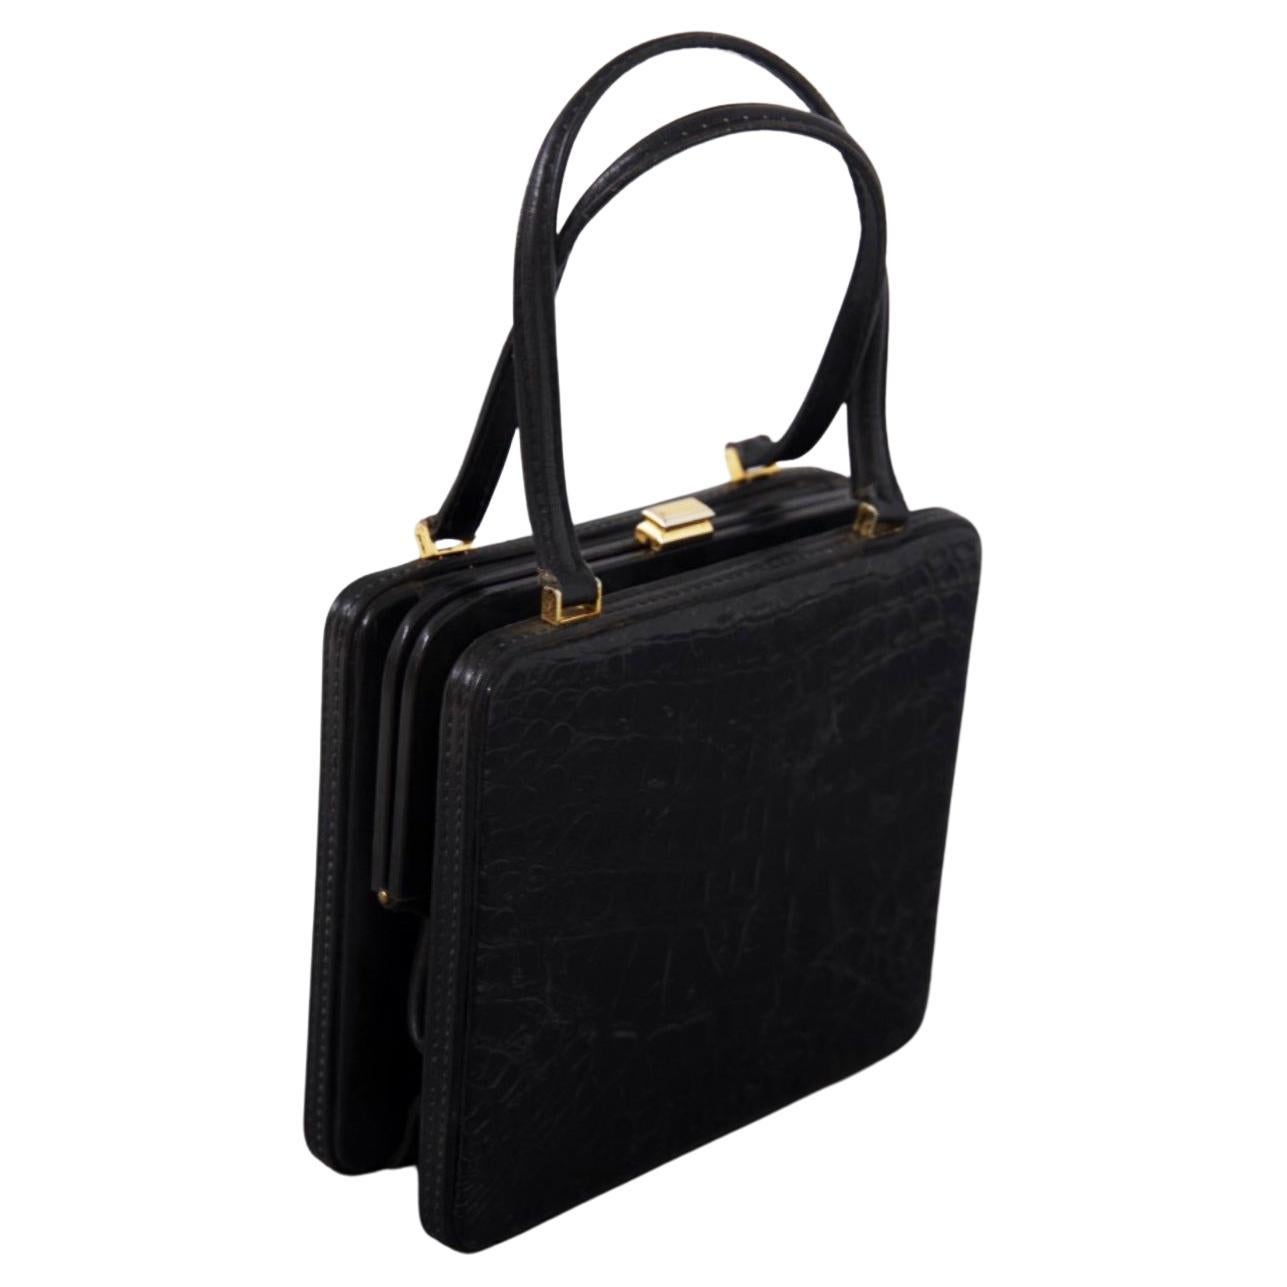 Buy 1960s Vintage Authentic Gucci Bordeaux Leather Handbag Online in India  